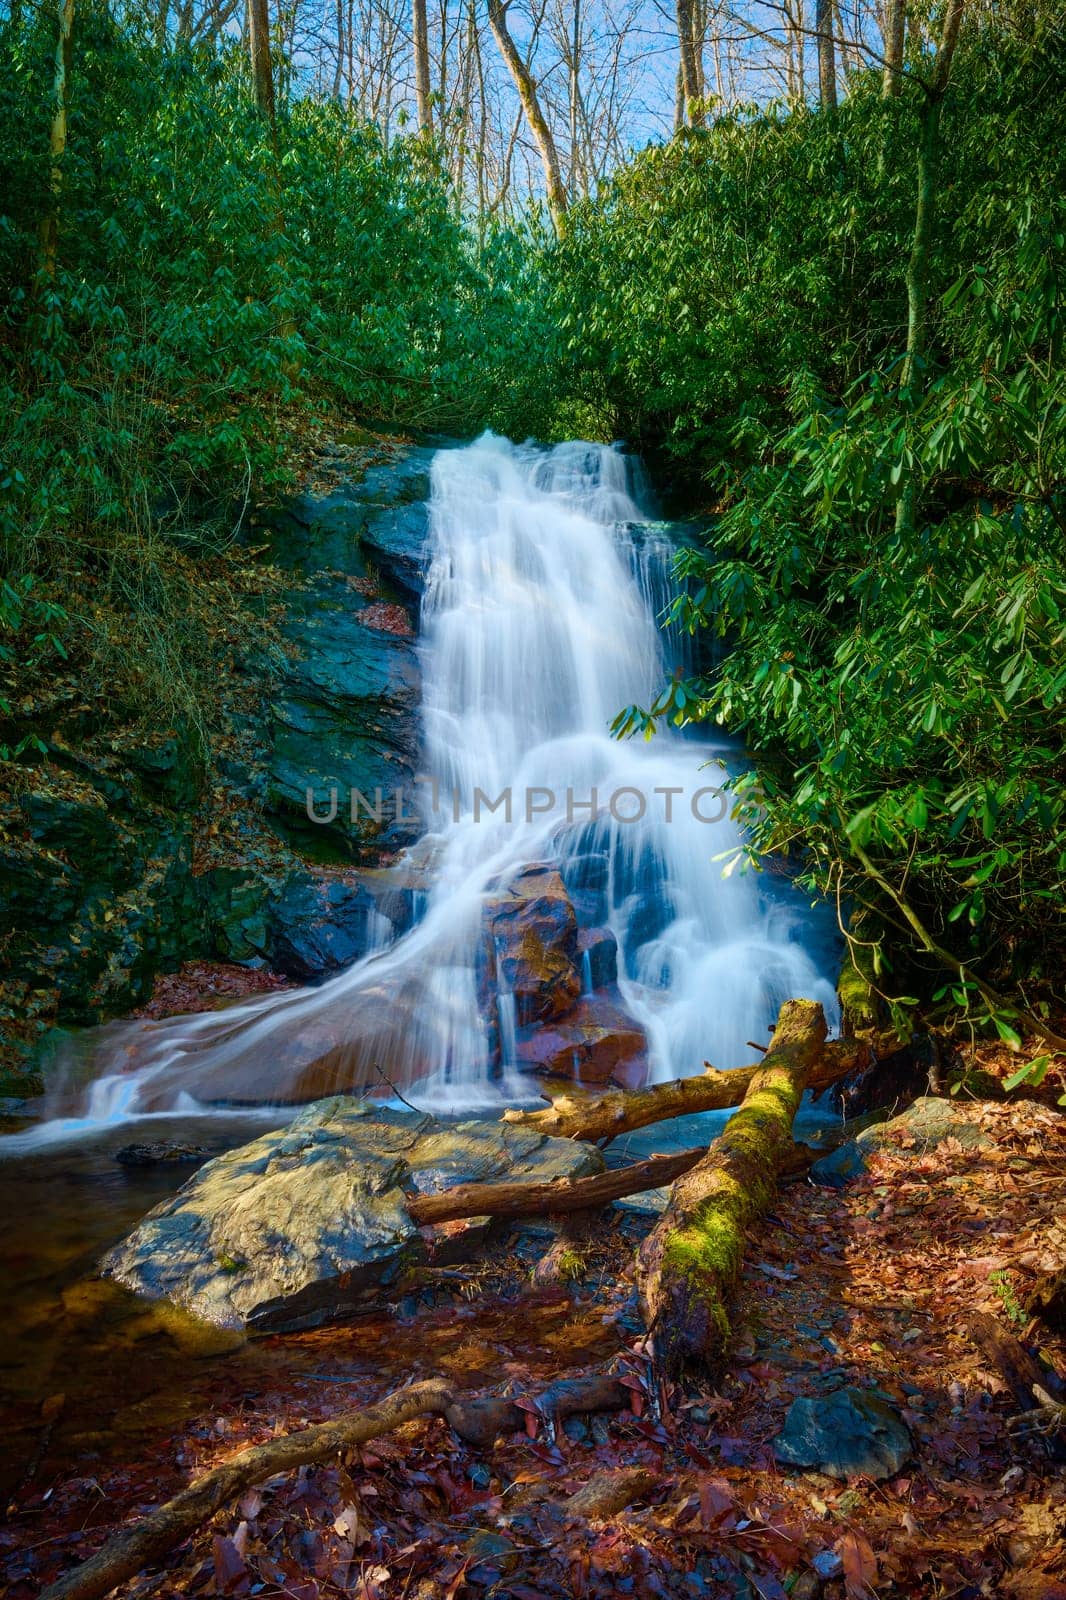 Log Hollow Falls in Pisgah National Forest, North Carolina.